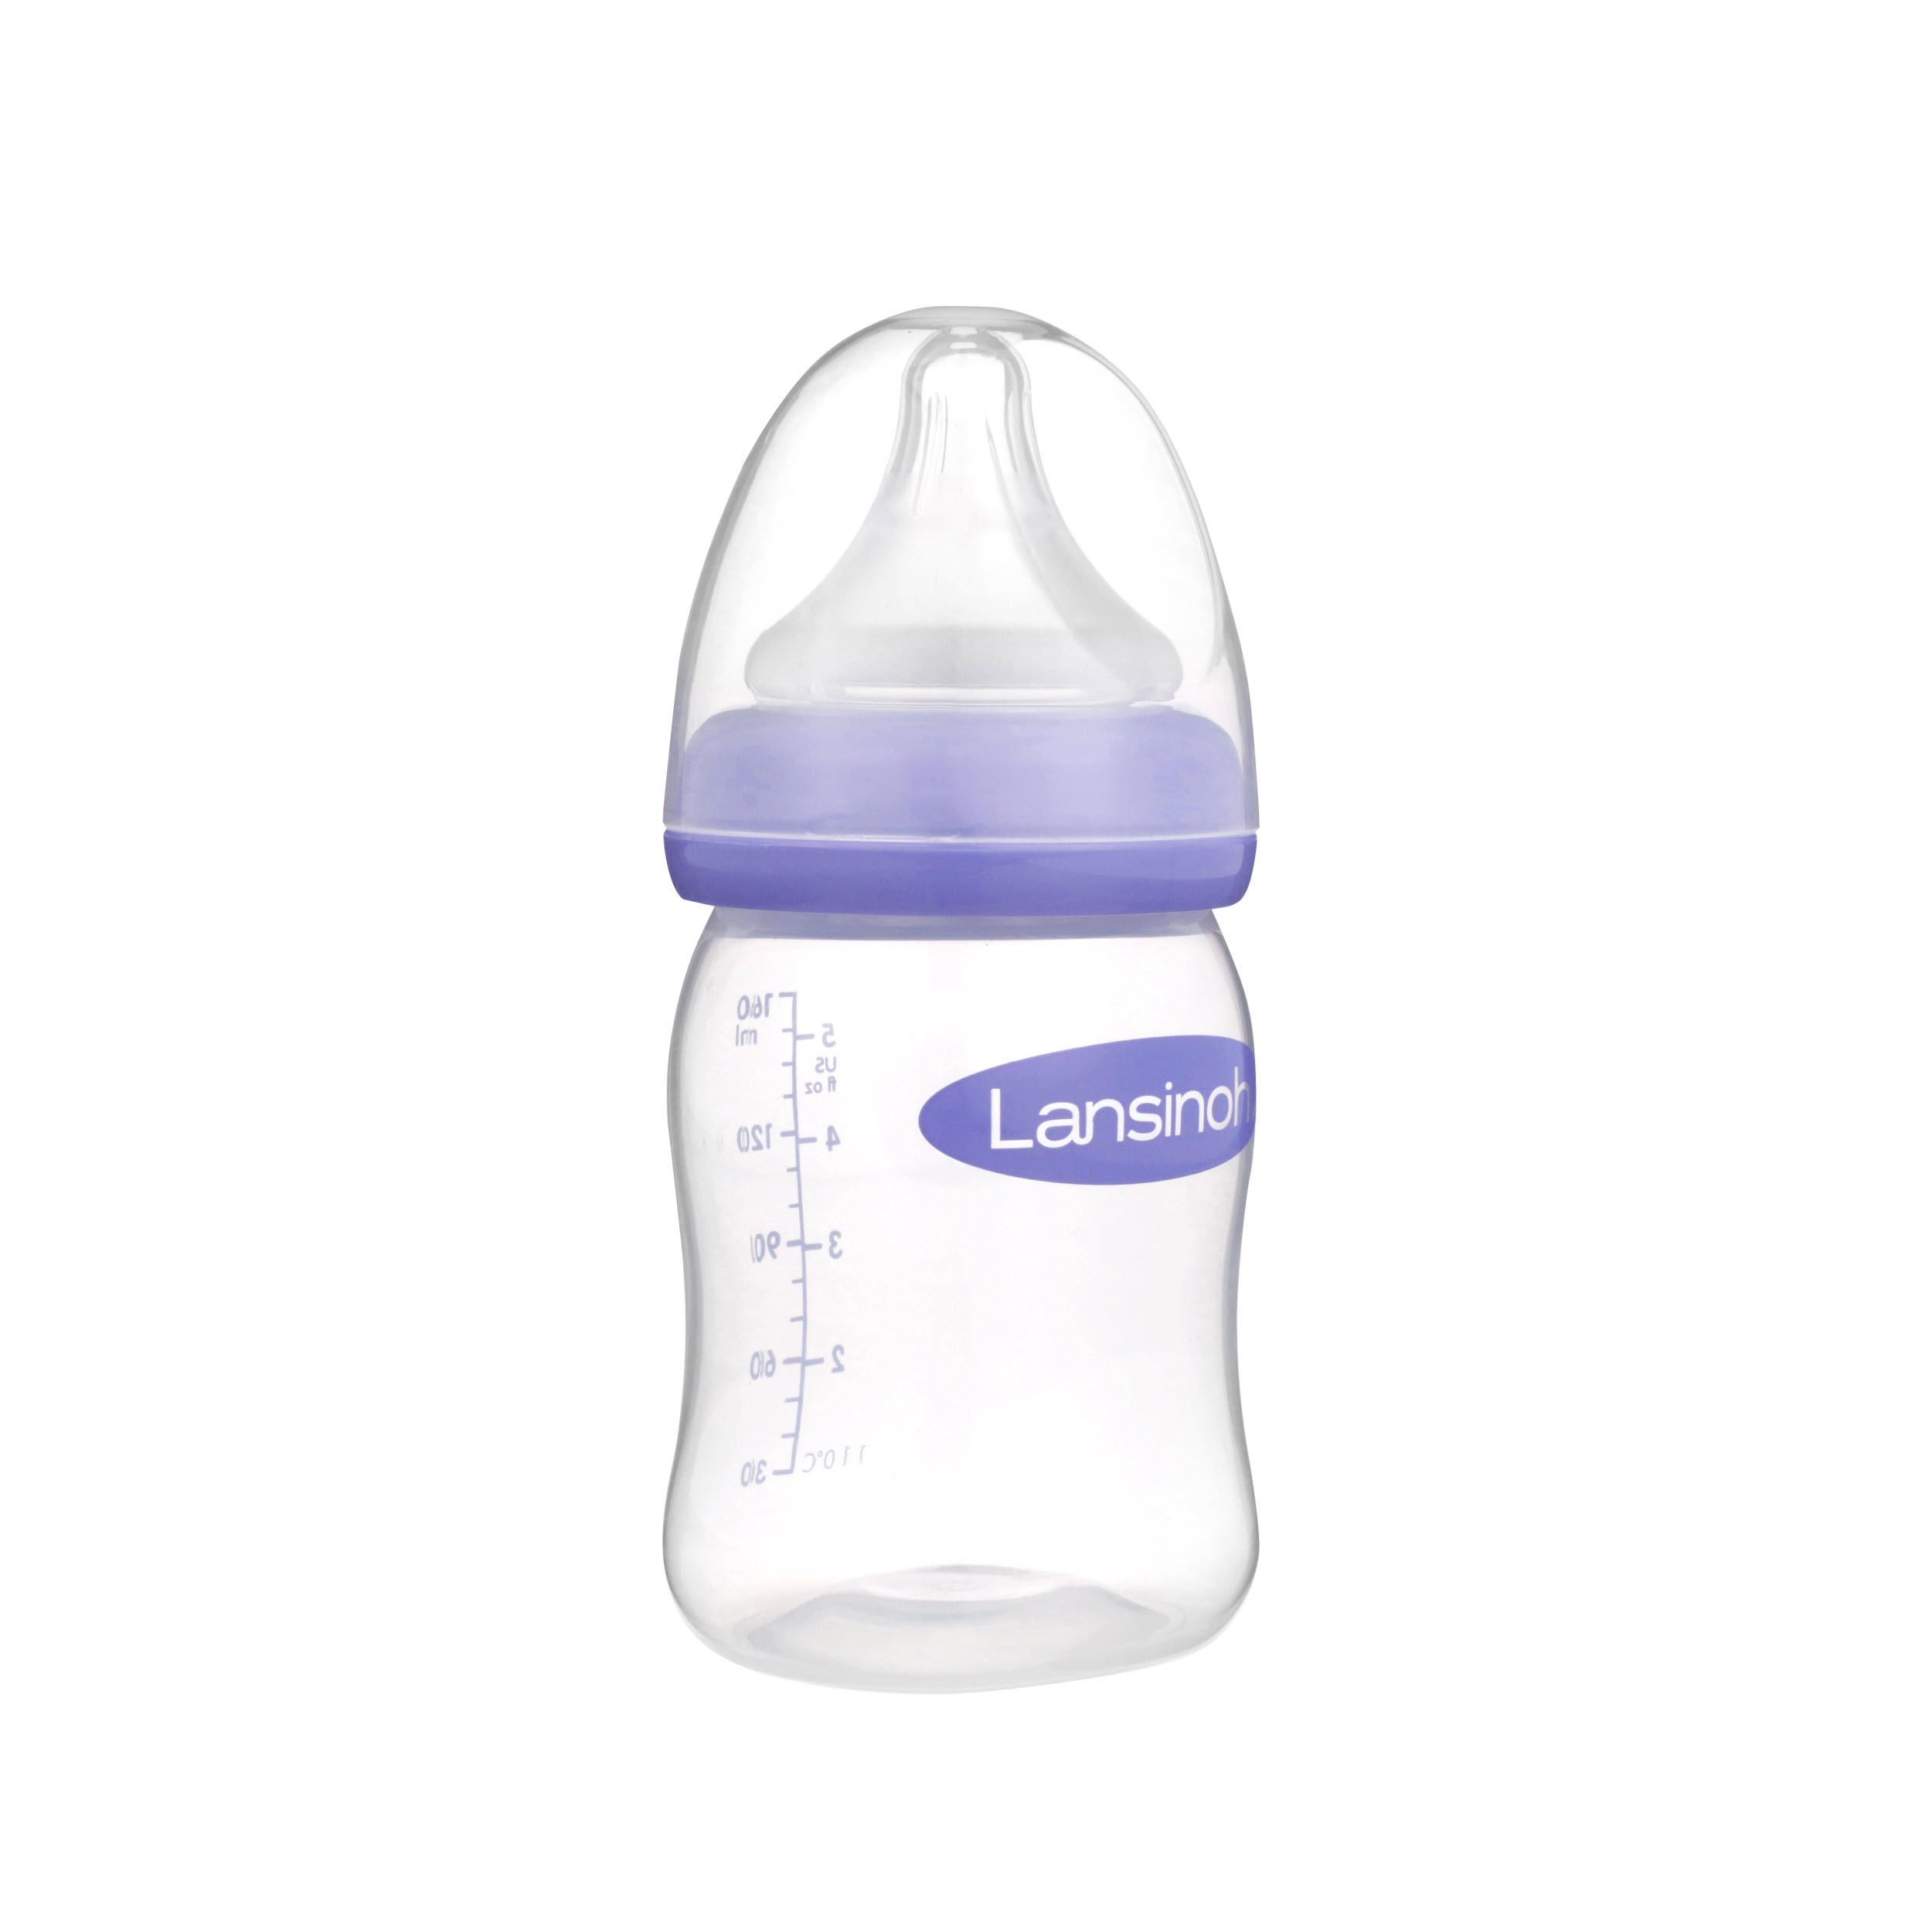 Lansinoh Breastmilk Feeding Bottles, 5 oz, 3 Ct, 1 - Fry's Food Stores